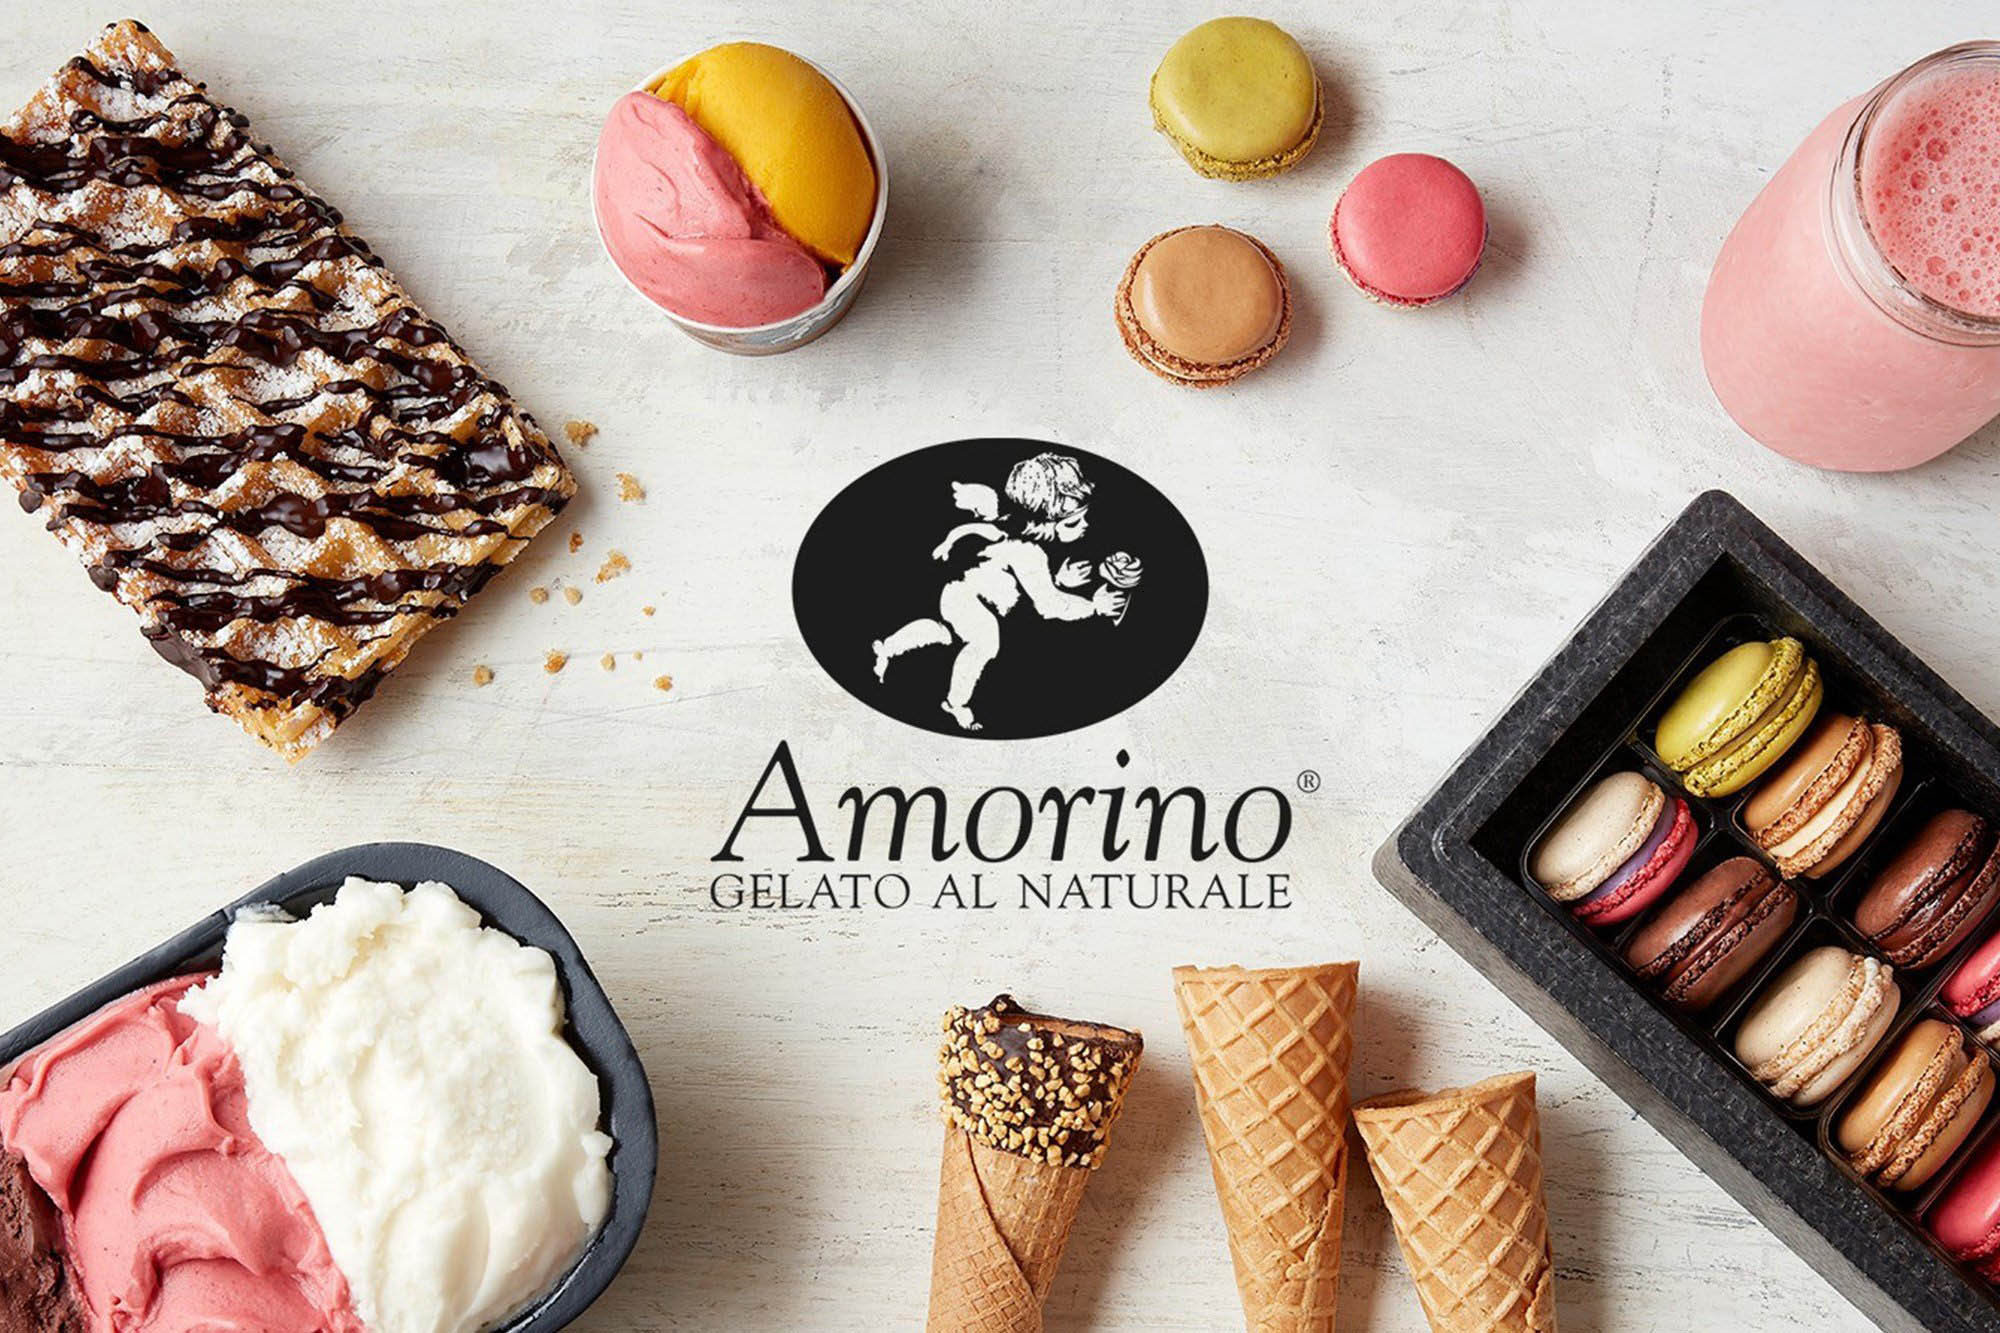 Photo: An overlay over ice cream, French macroons, and gelato treats from Amorino. Text overlay is Amorina logo.